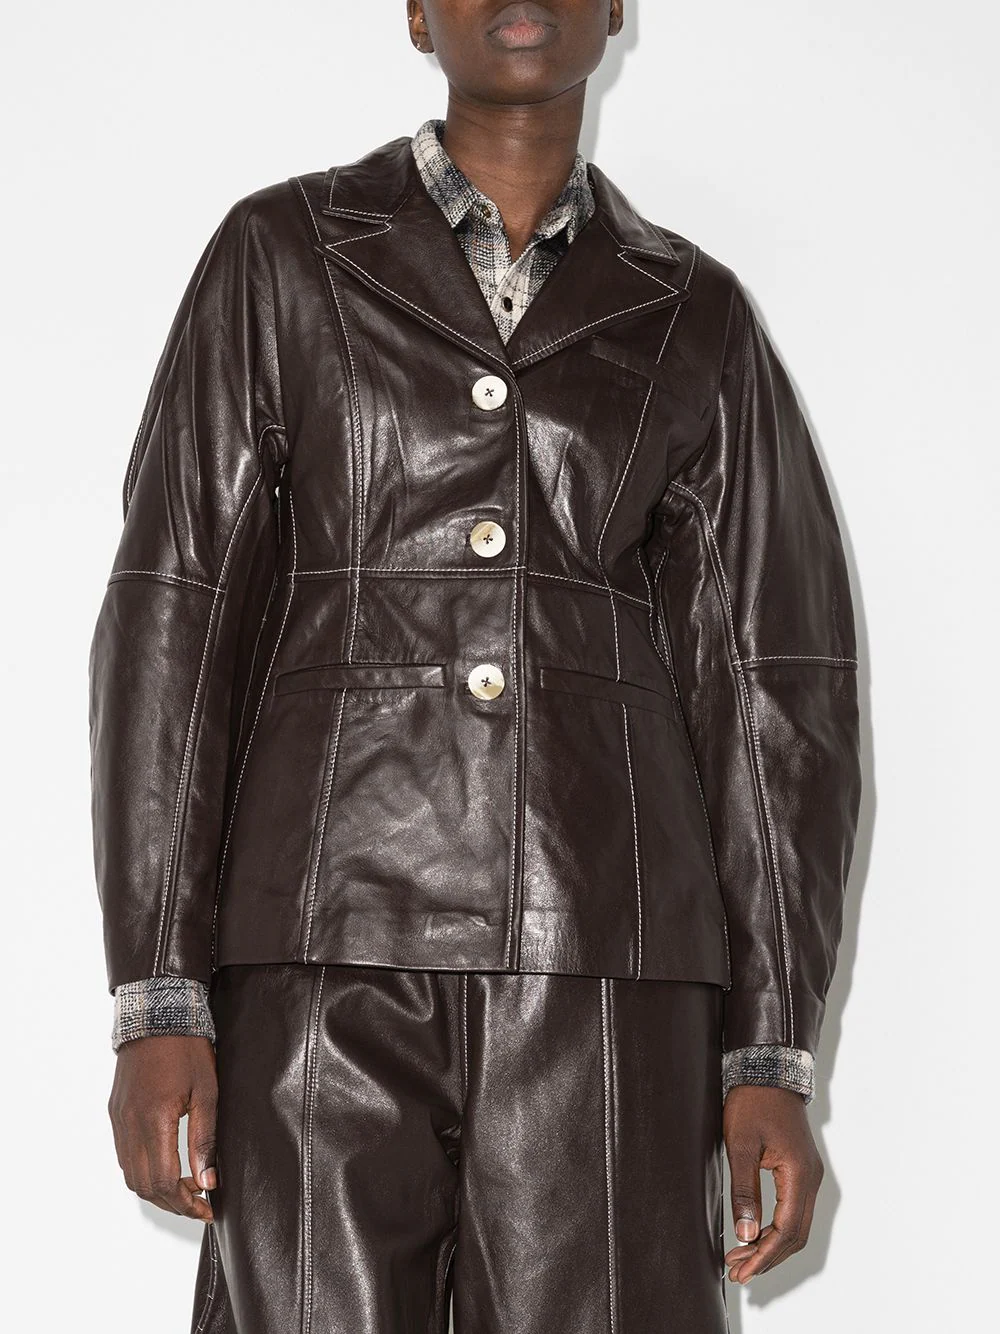 Men suede Jacket Genuine Leather Biker Jacket Winter Warm With Free Wallet  MSJ2 | eBay